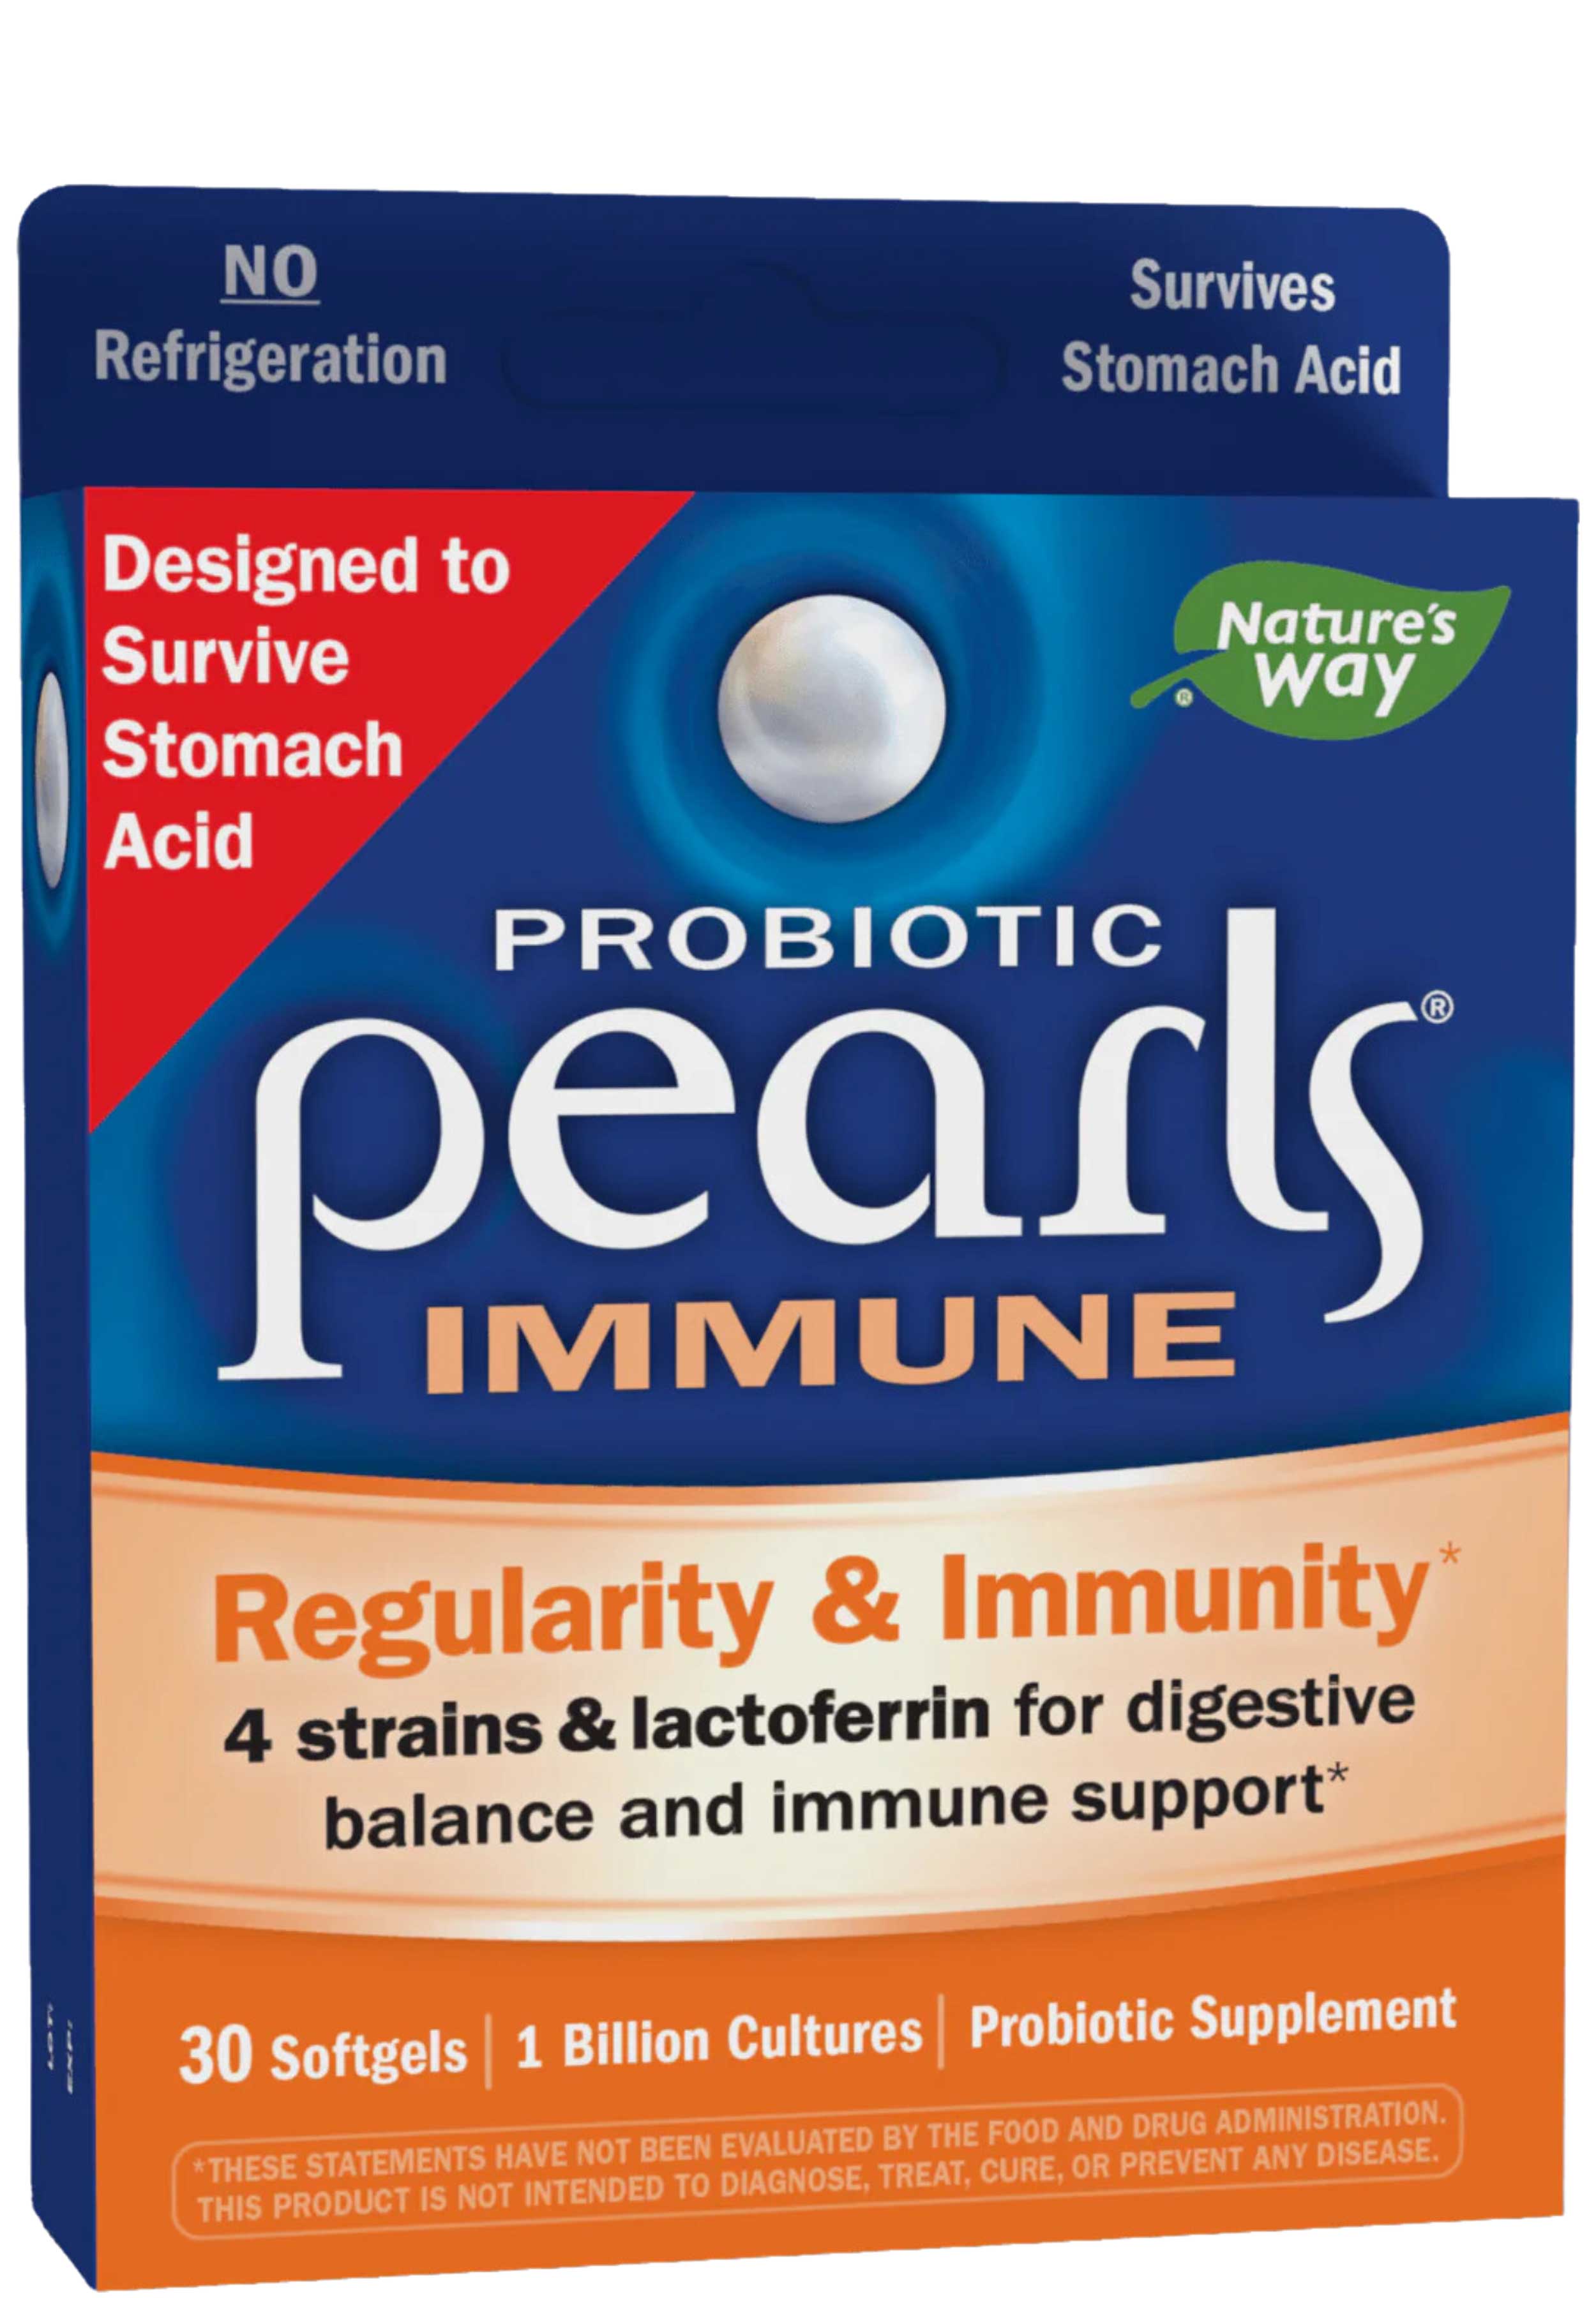 Nature's Way Probiotic Pearls Immune